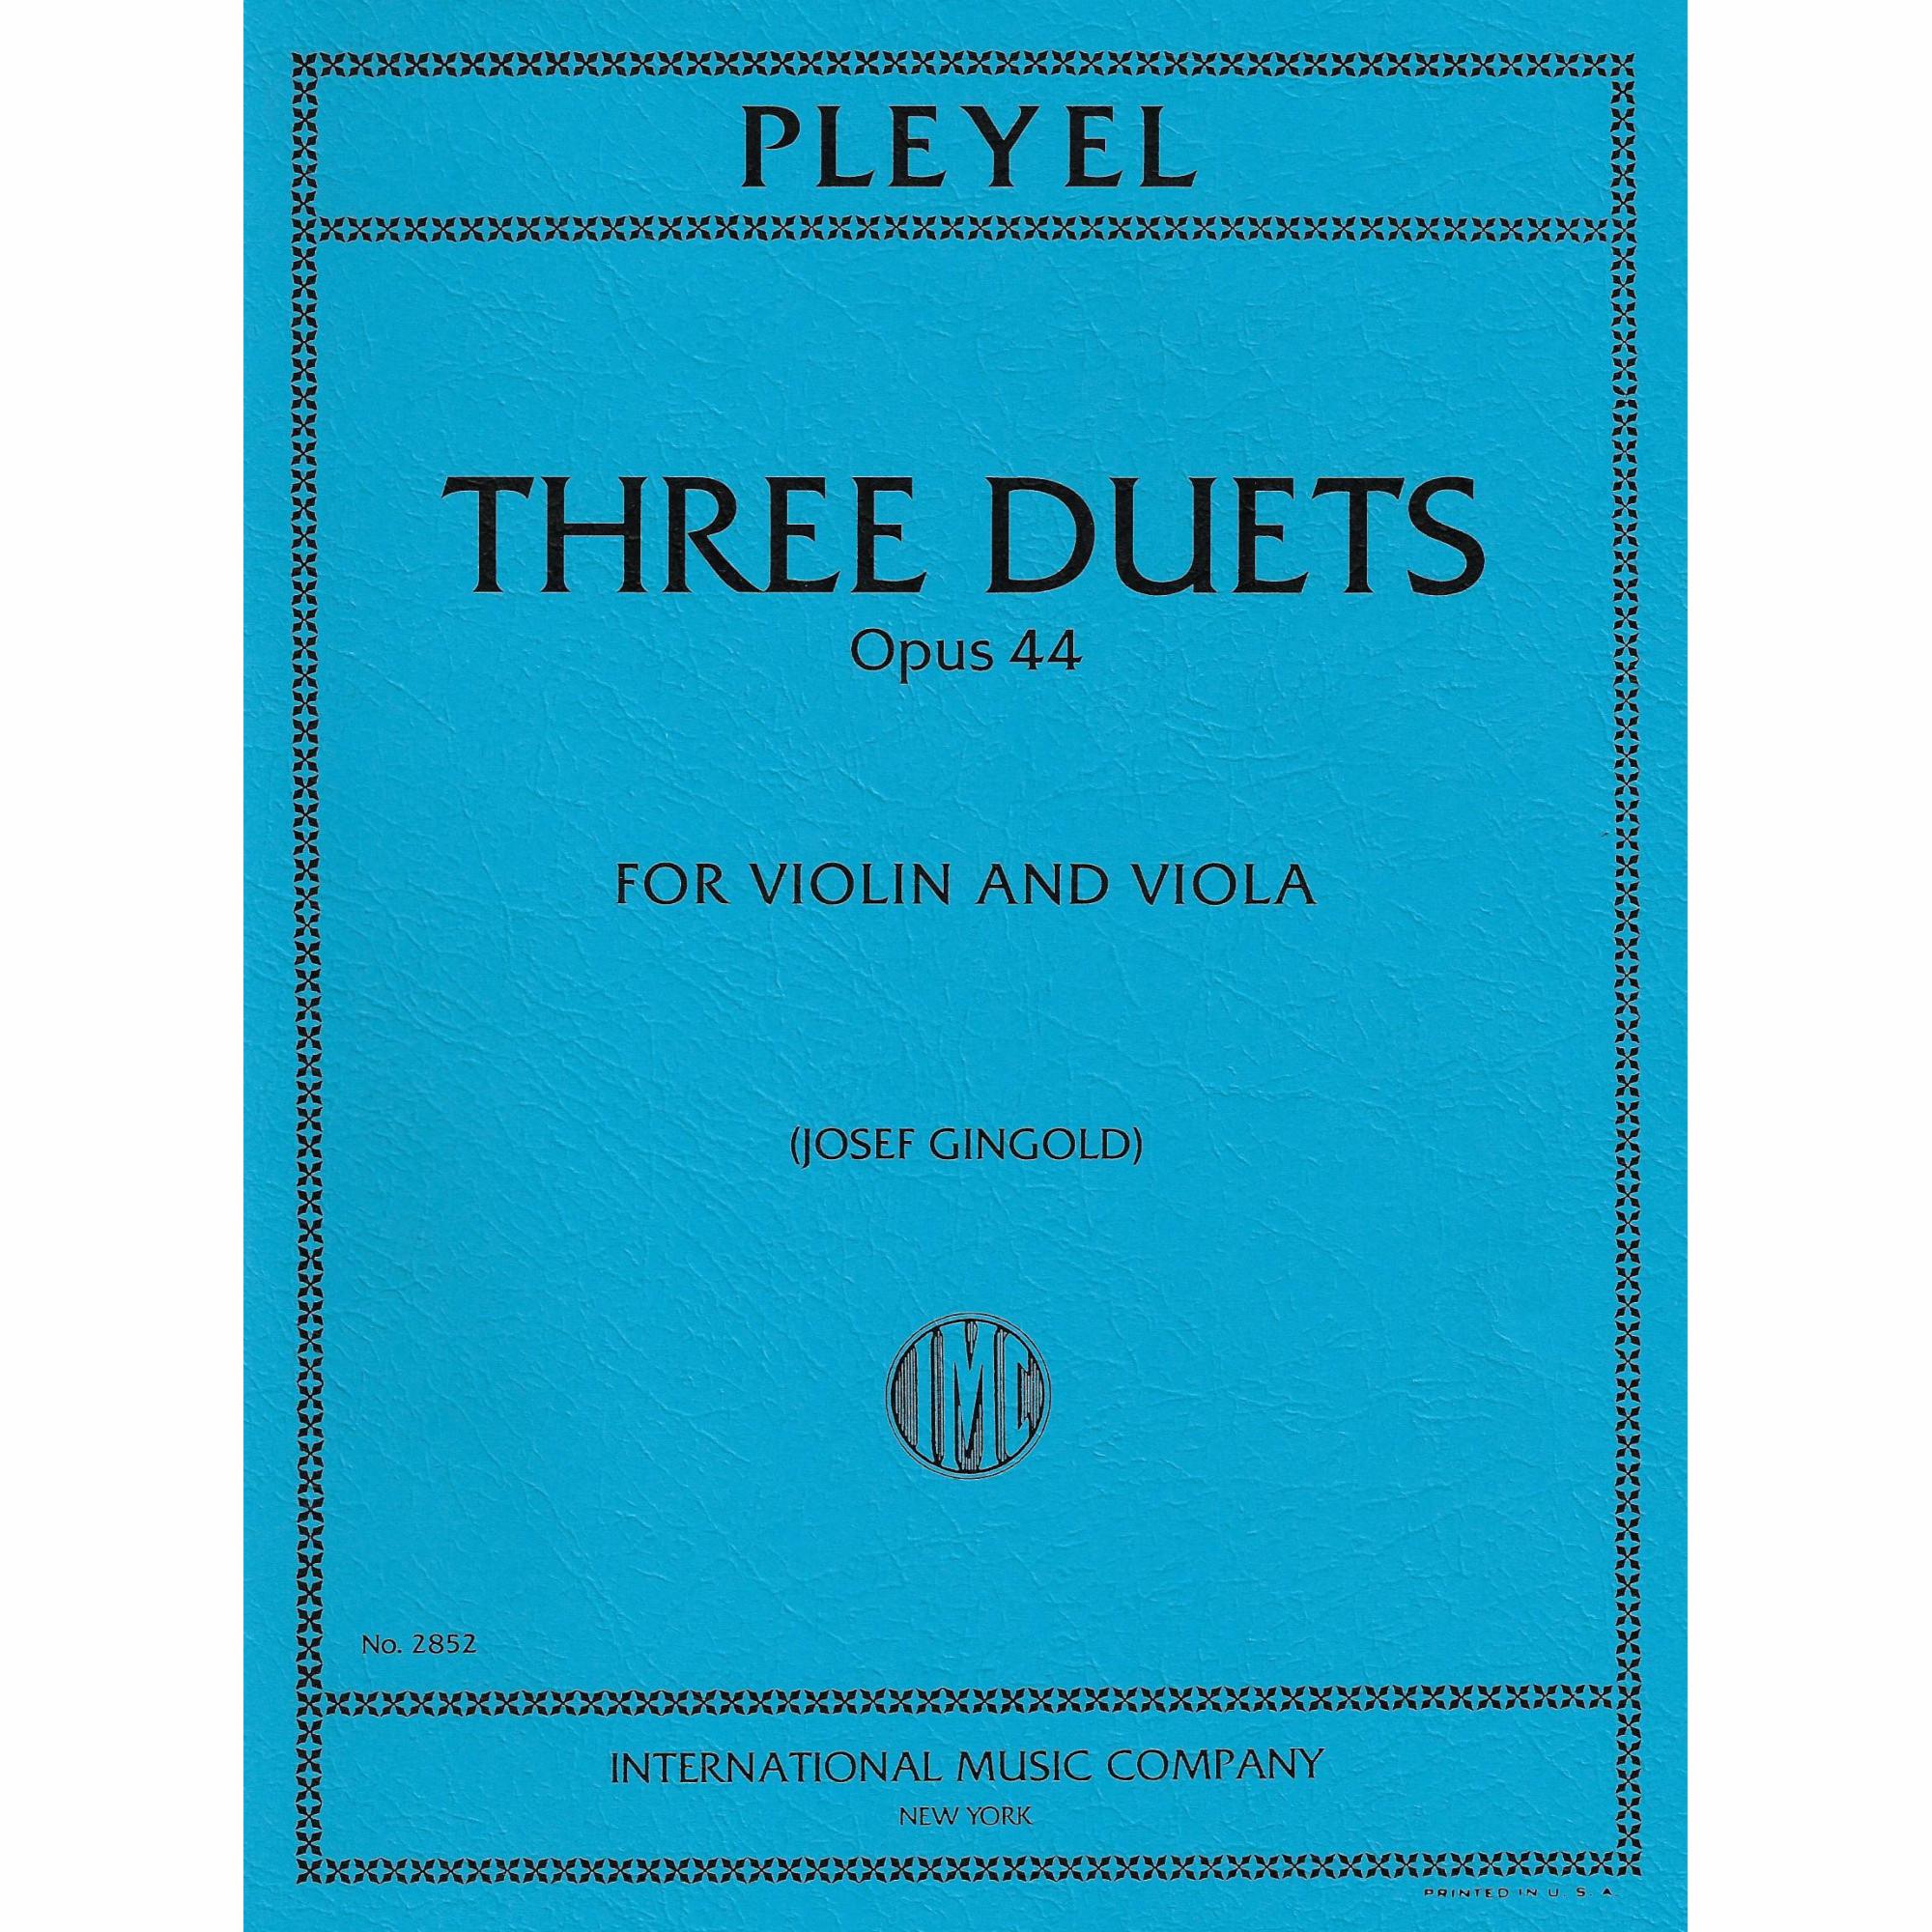 Pleyel -- Three Duets, Op. 44 for Violin and Viola